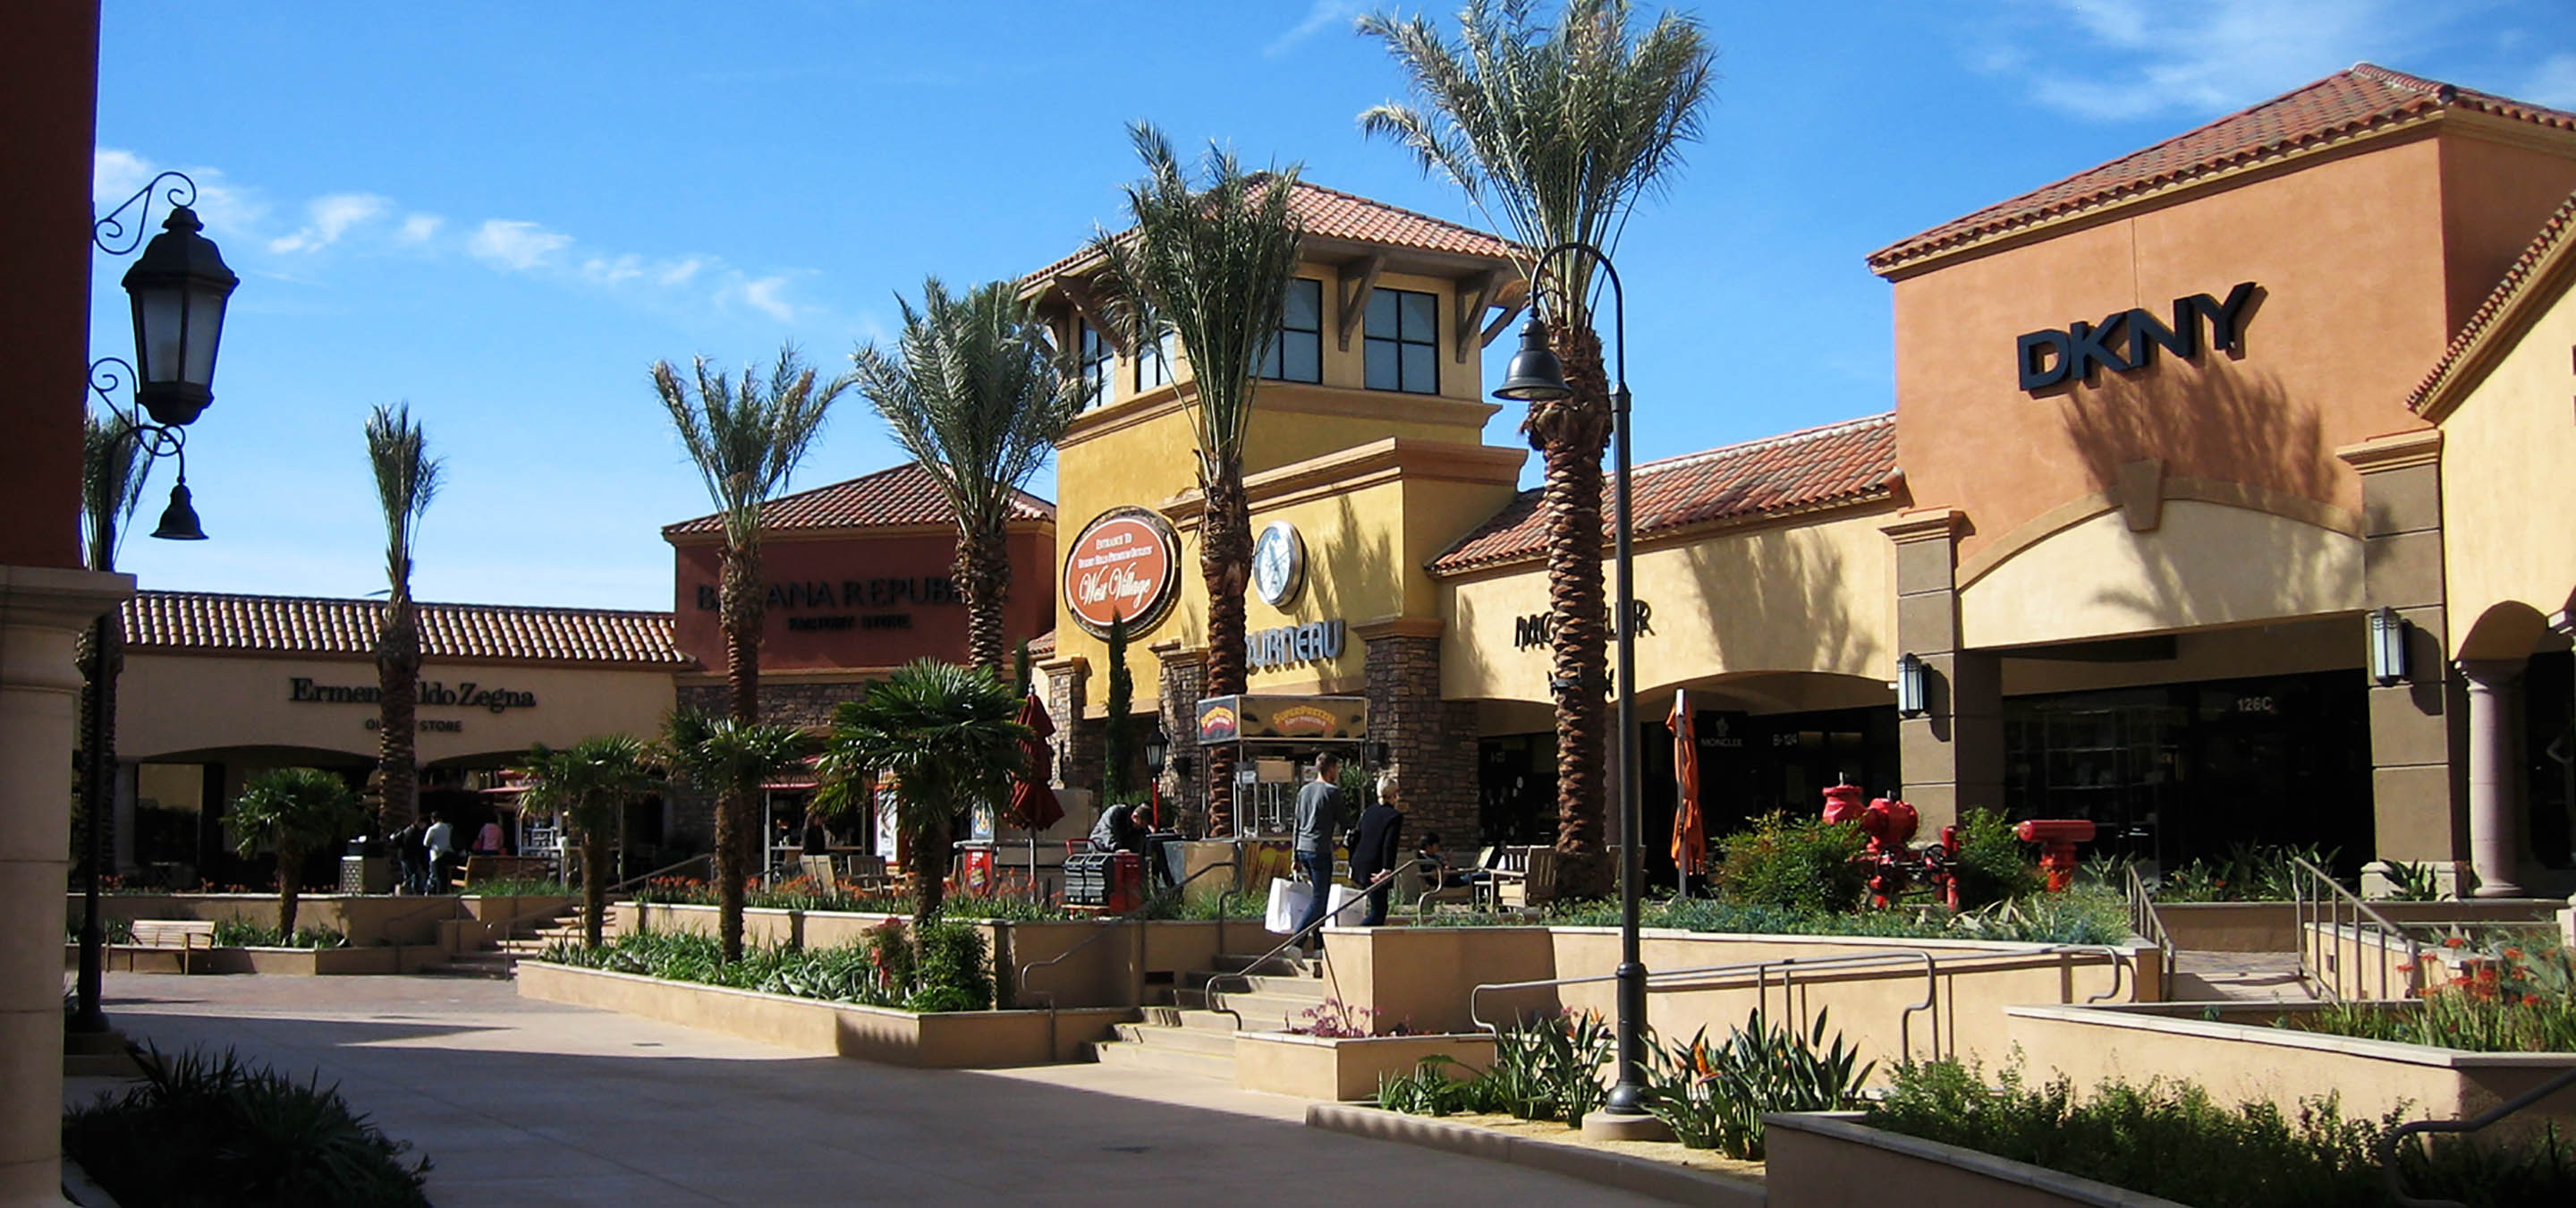 Desert Hills Premium Outlets - Architects Orange